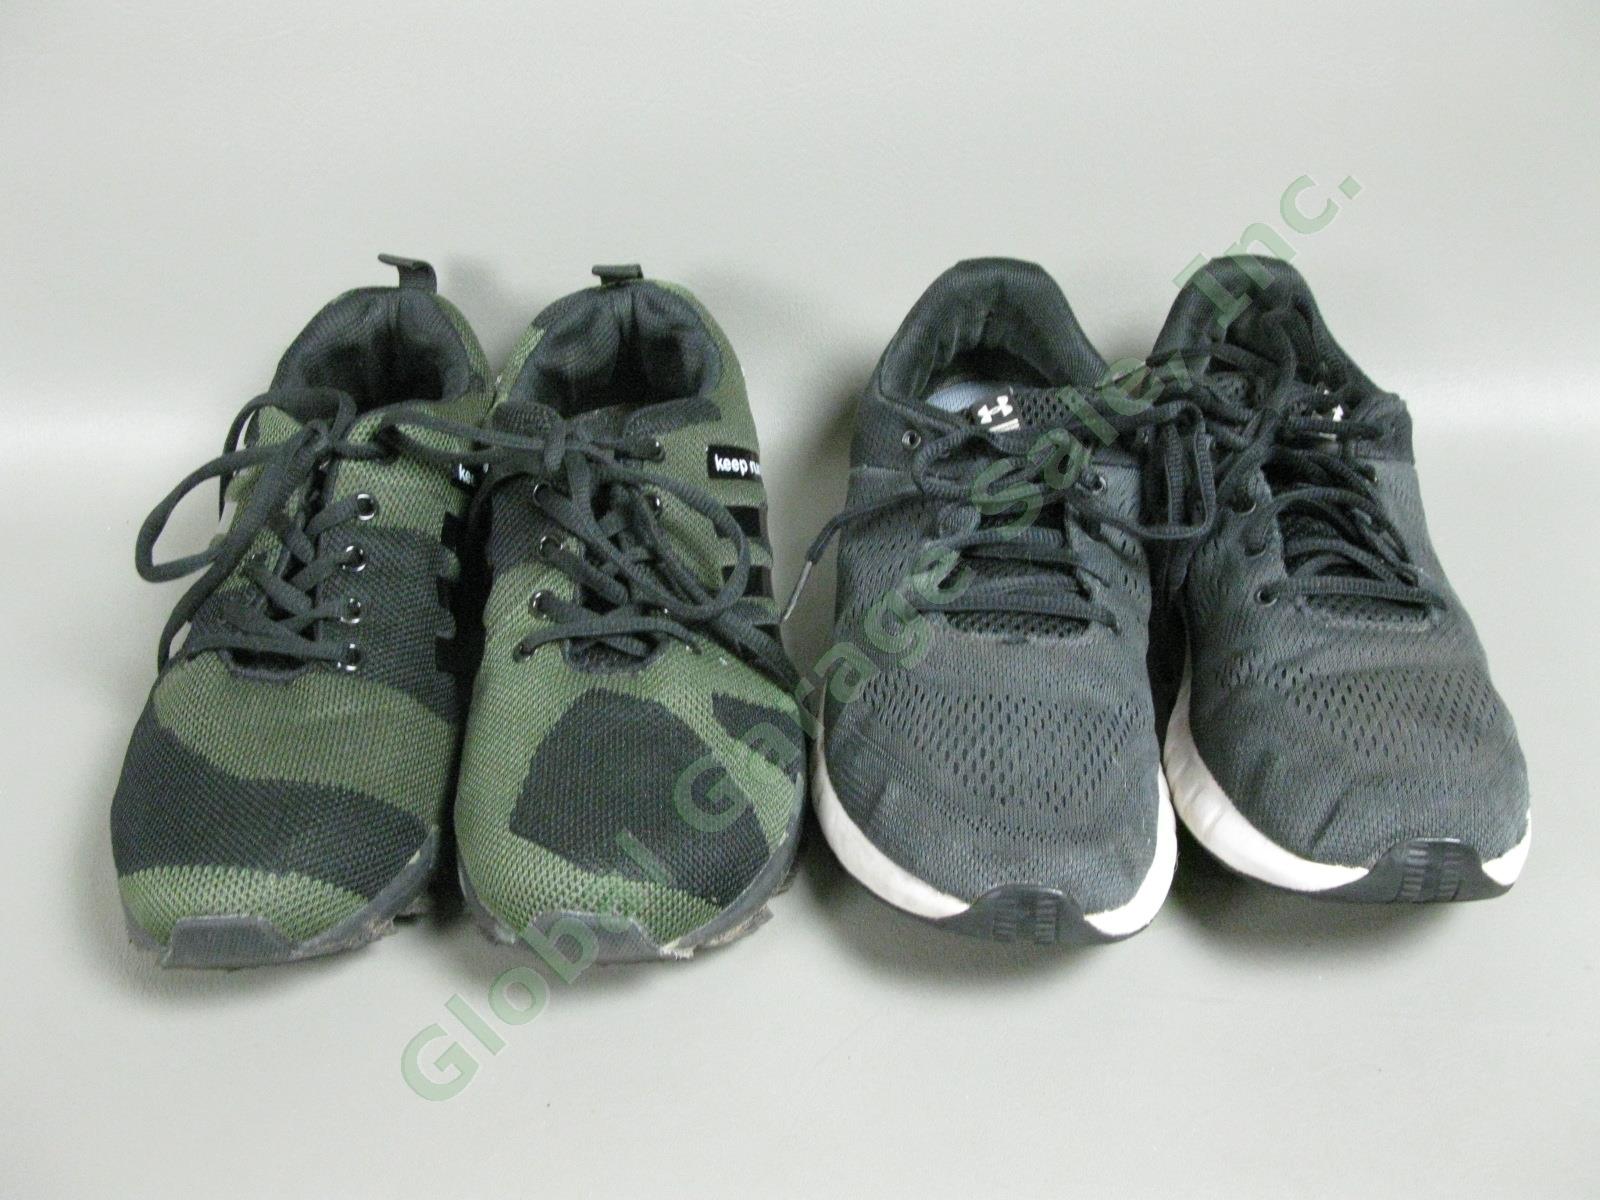 10 Pairs Mens Sneaker Shoe Lot New Balance Under Armour Asics Brooks Size 8.5-11 11